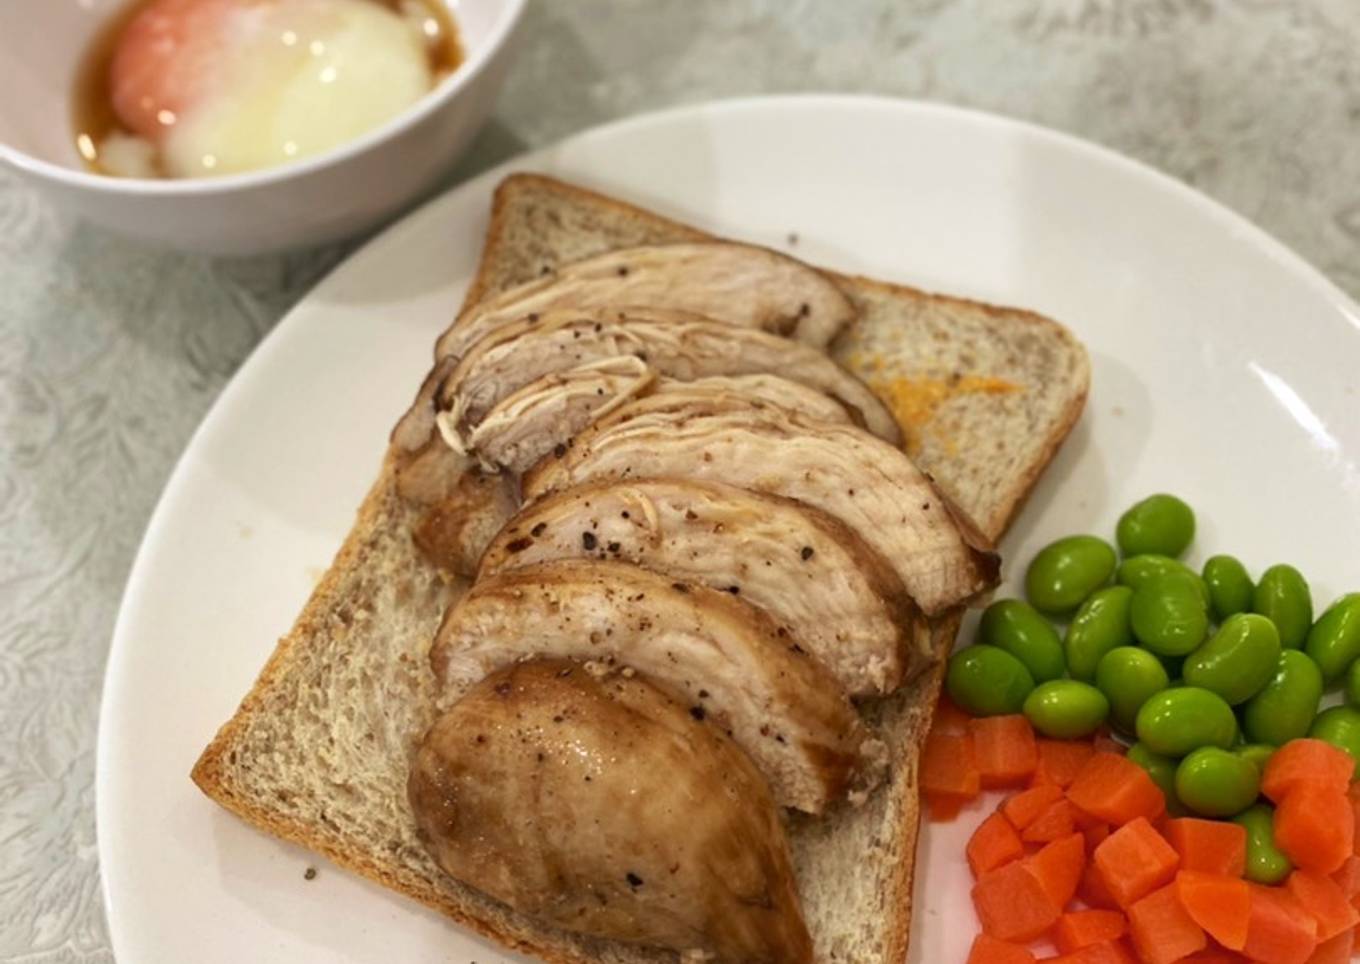 Roasted chicken breast sandwich